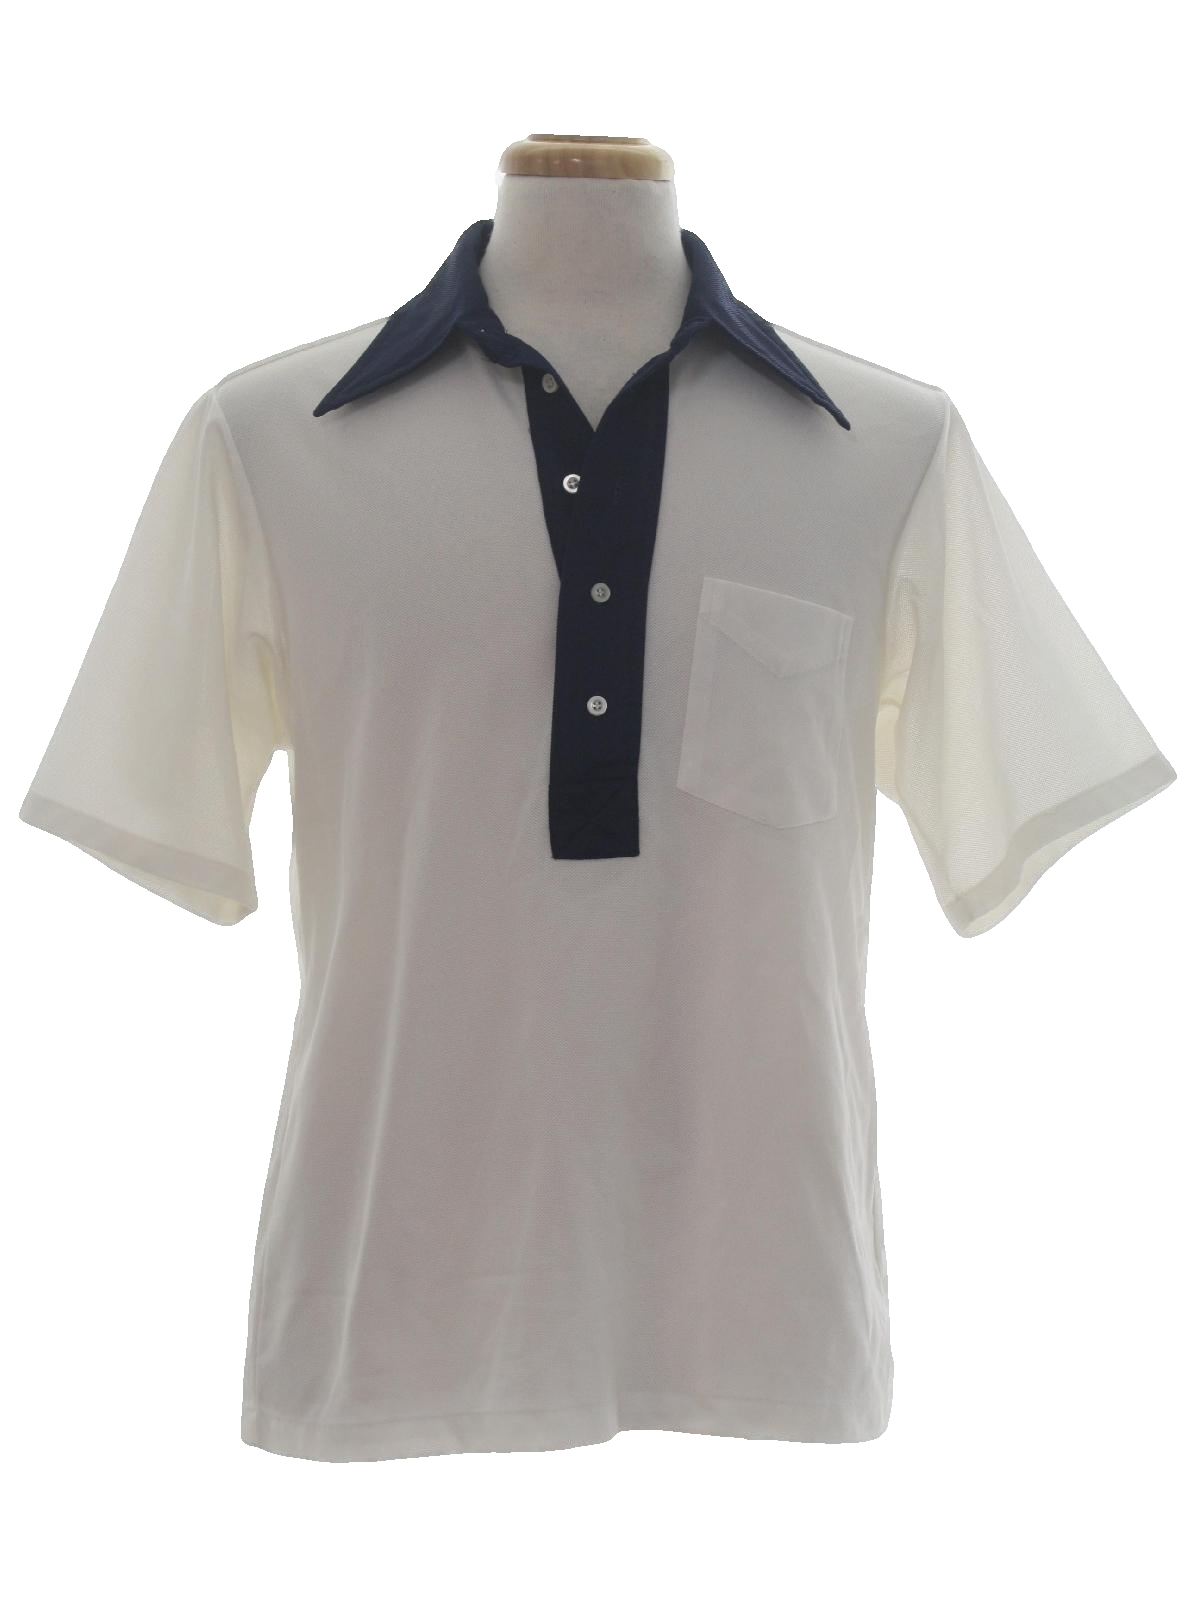 Retro 1970's Shirt (Enro) : 70s -Enro- Mens white background polyester ...